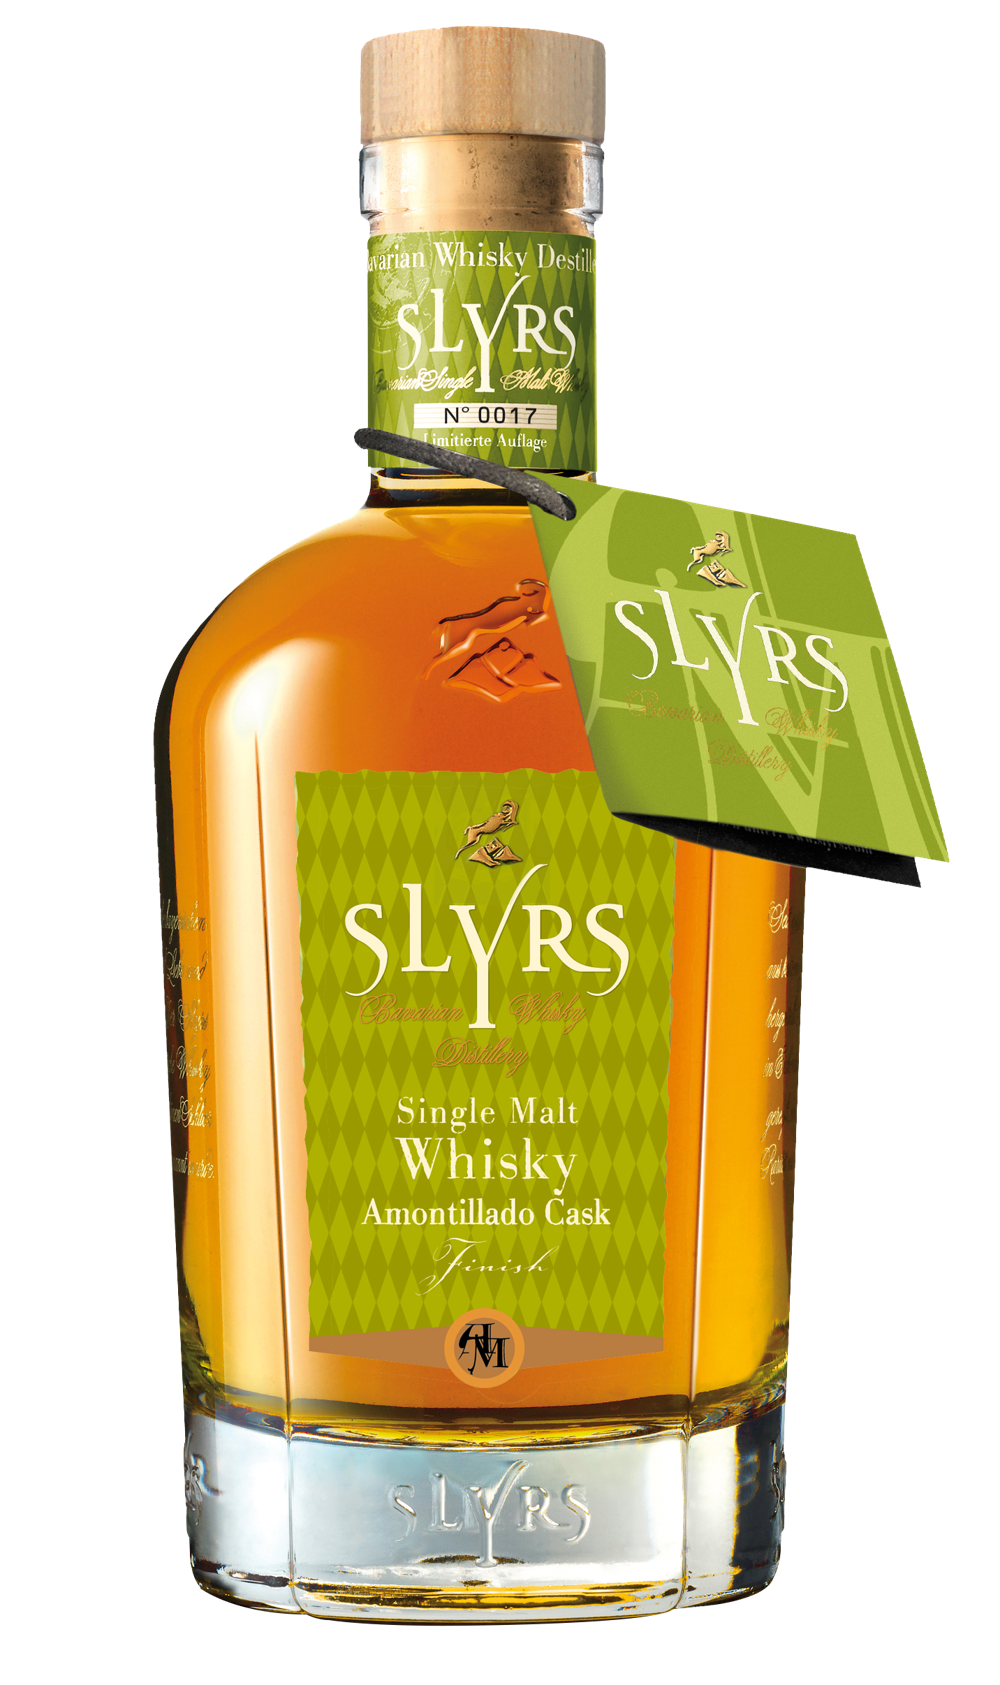 SLYRS Single Malt Whisky Amontillado Cask Finish 46% vol. 46.0% 0.35L, Spirits